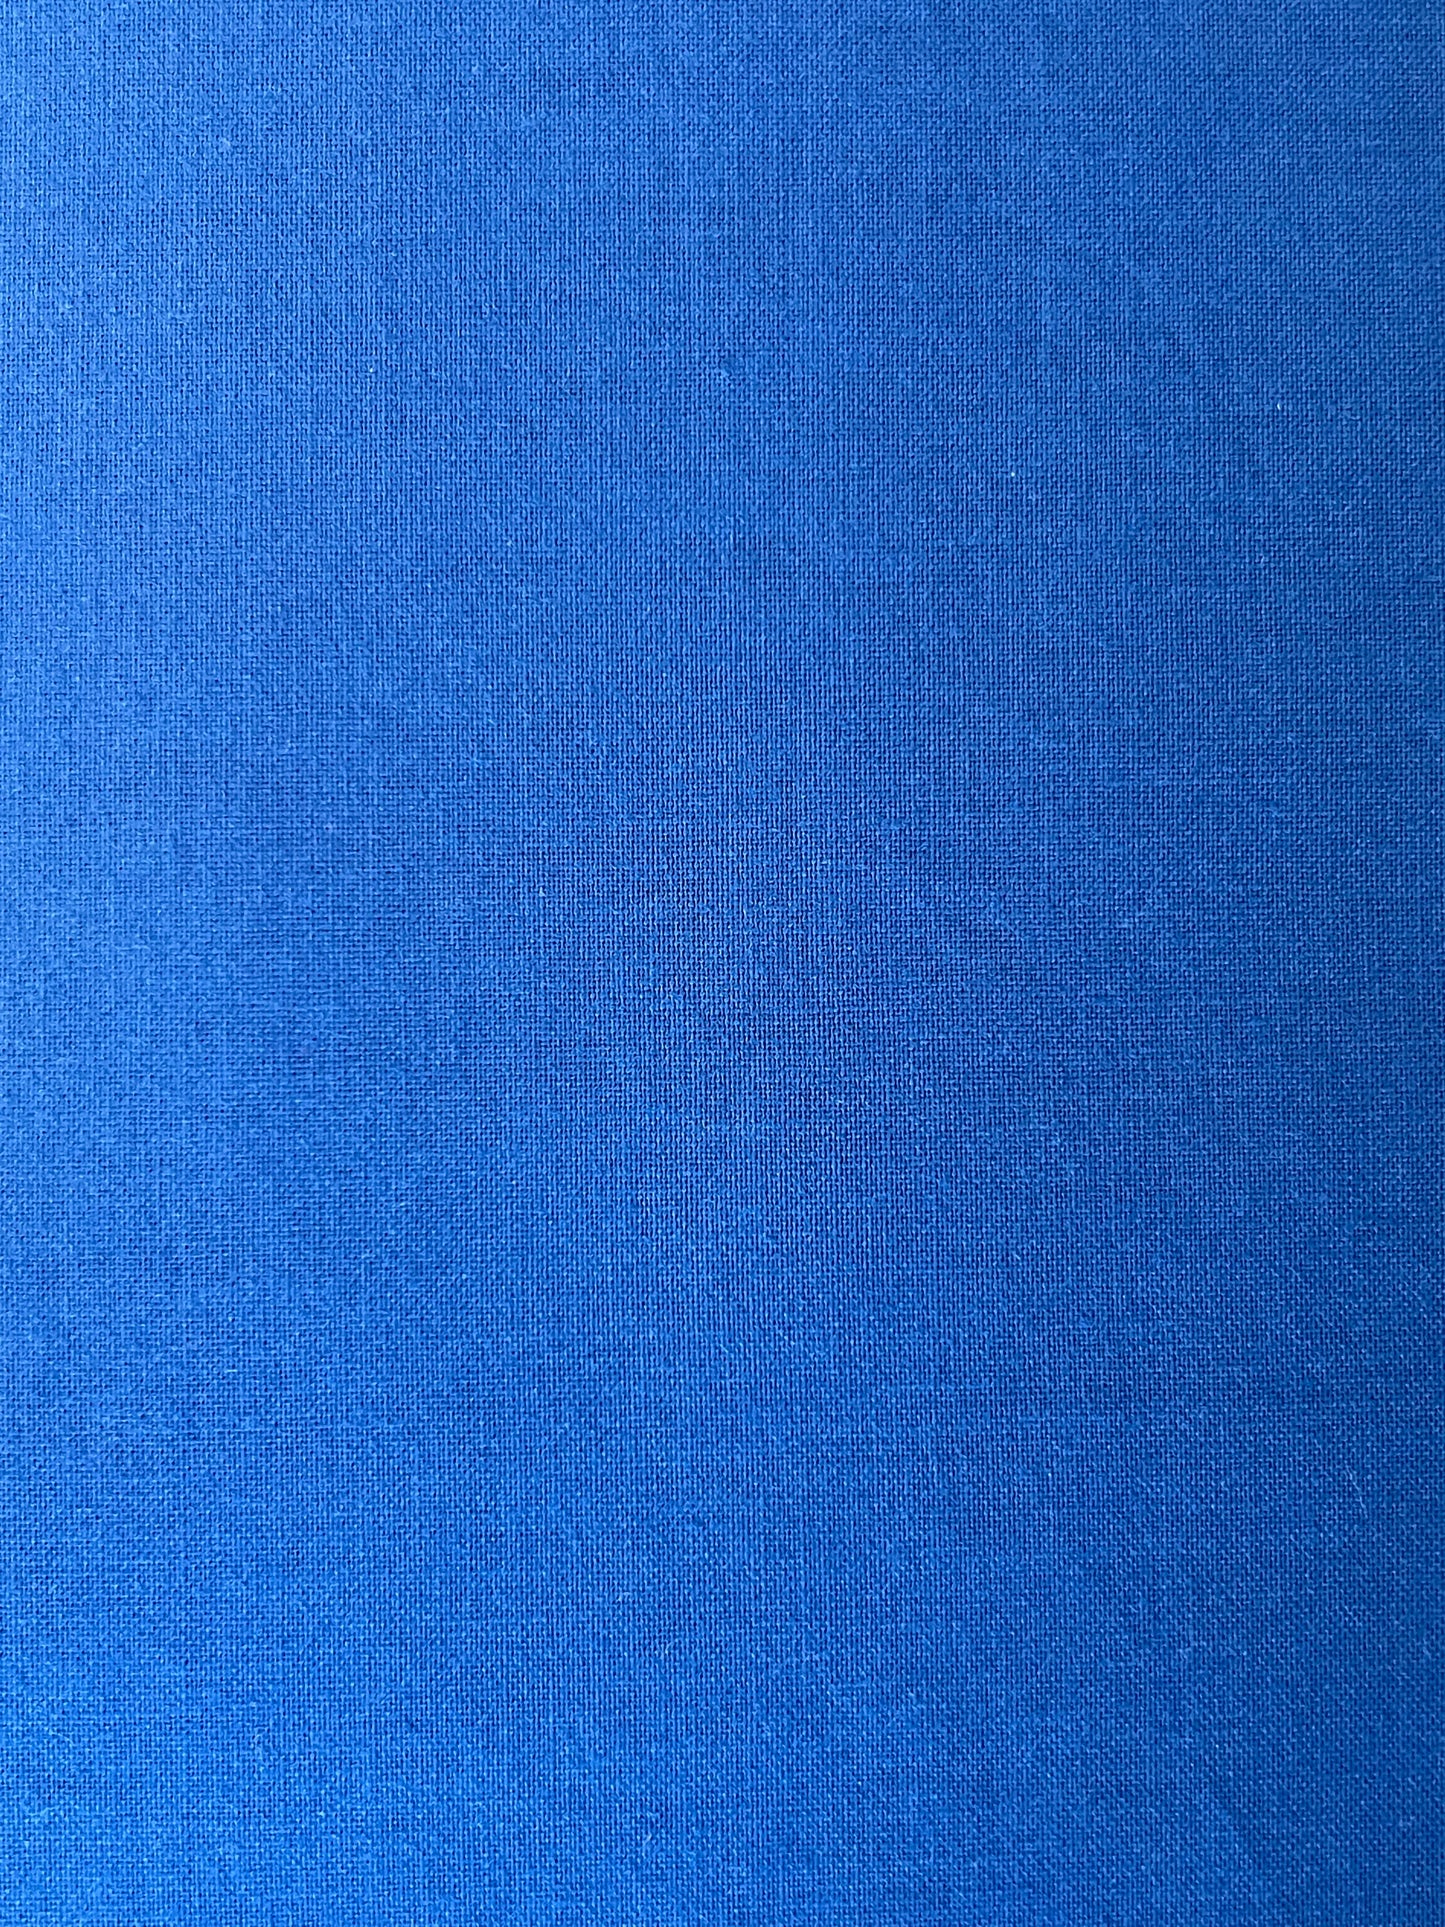 Kona Royal Blue Cotton Futon Cover.  Handmade Shiki Futon Cover.